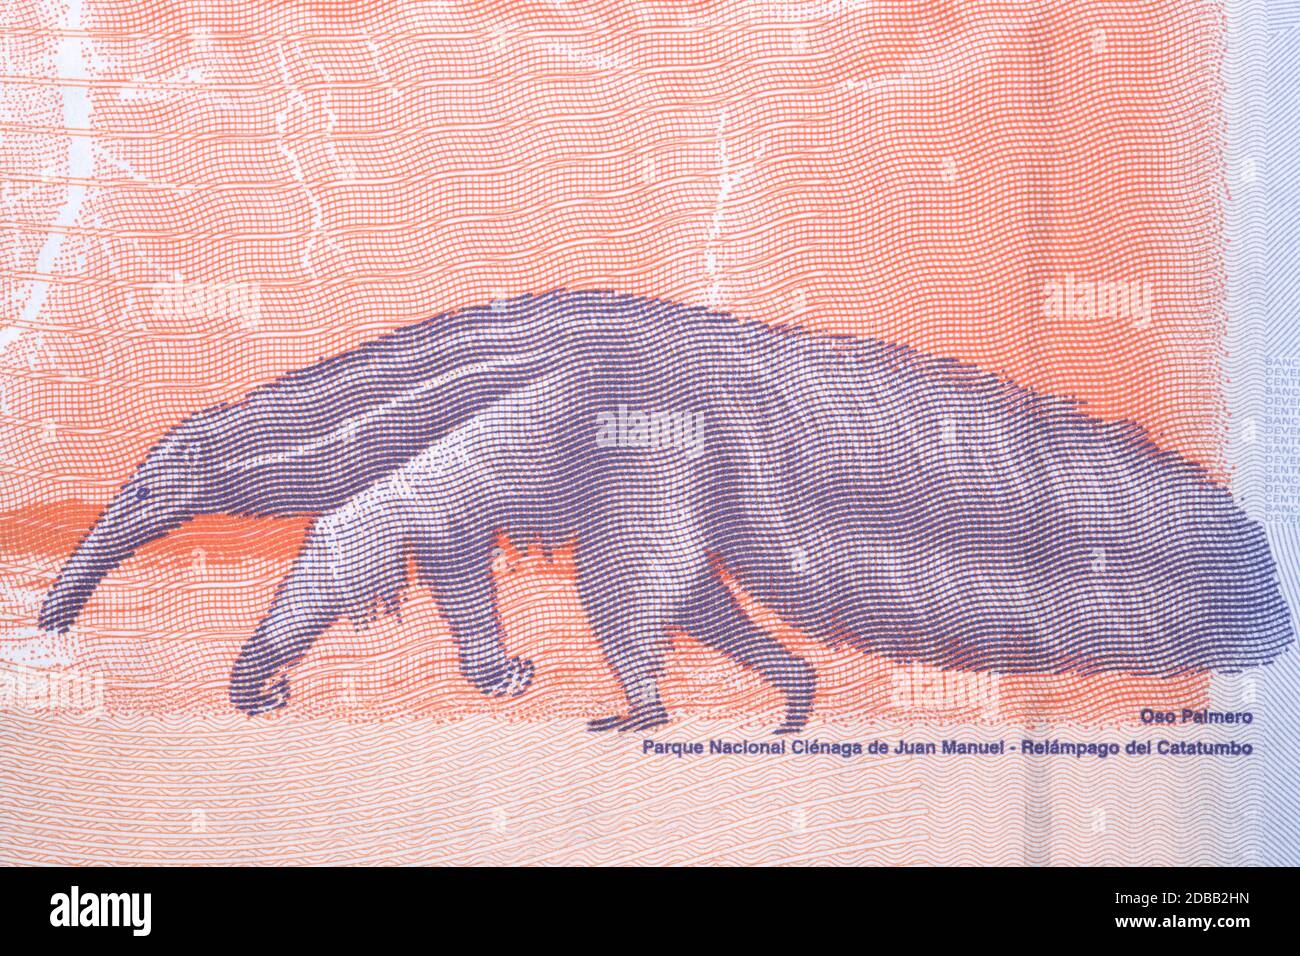 Giant anteater a portrait from Venezuelan money Stock Photo